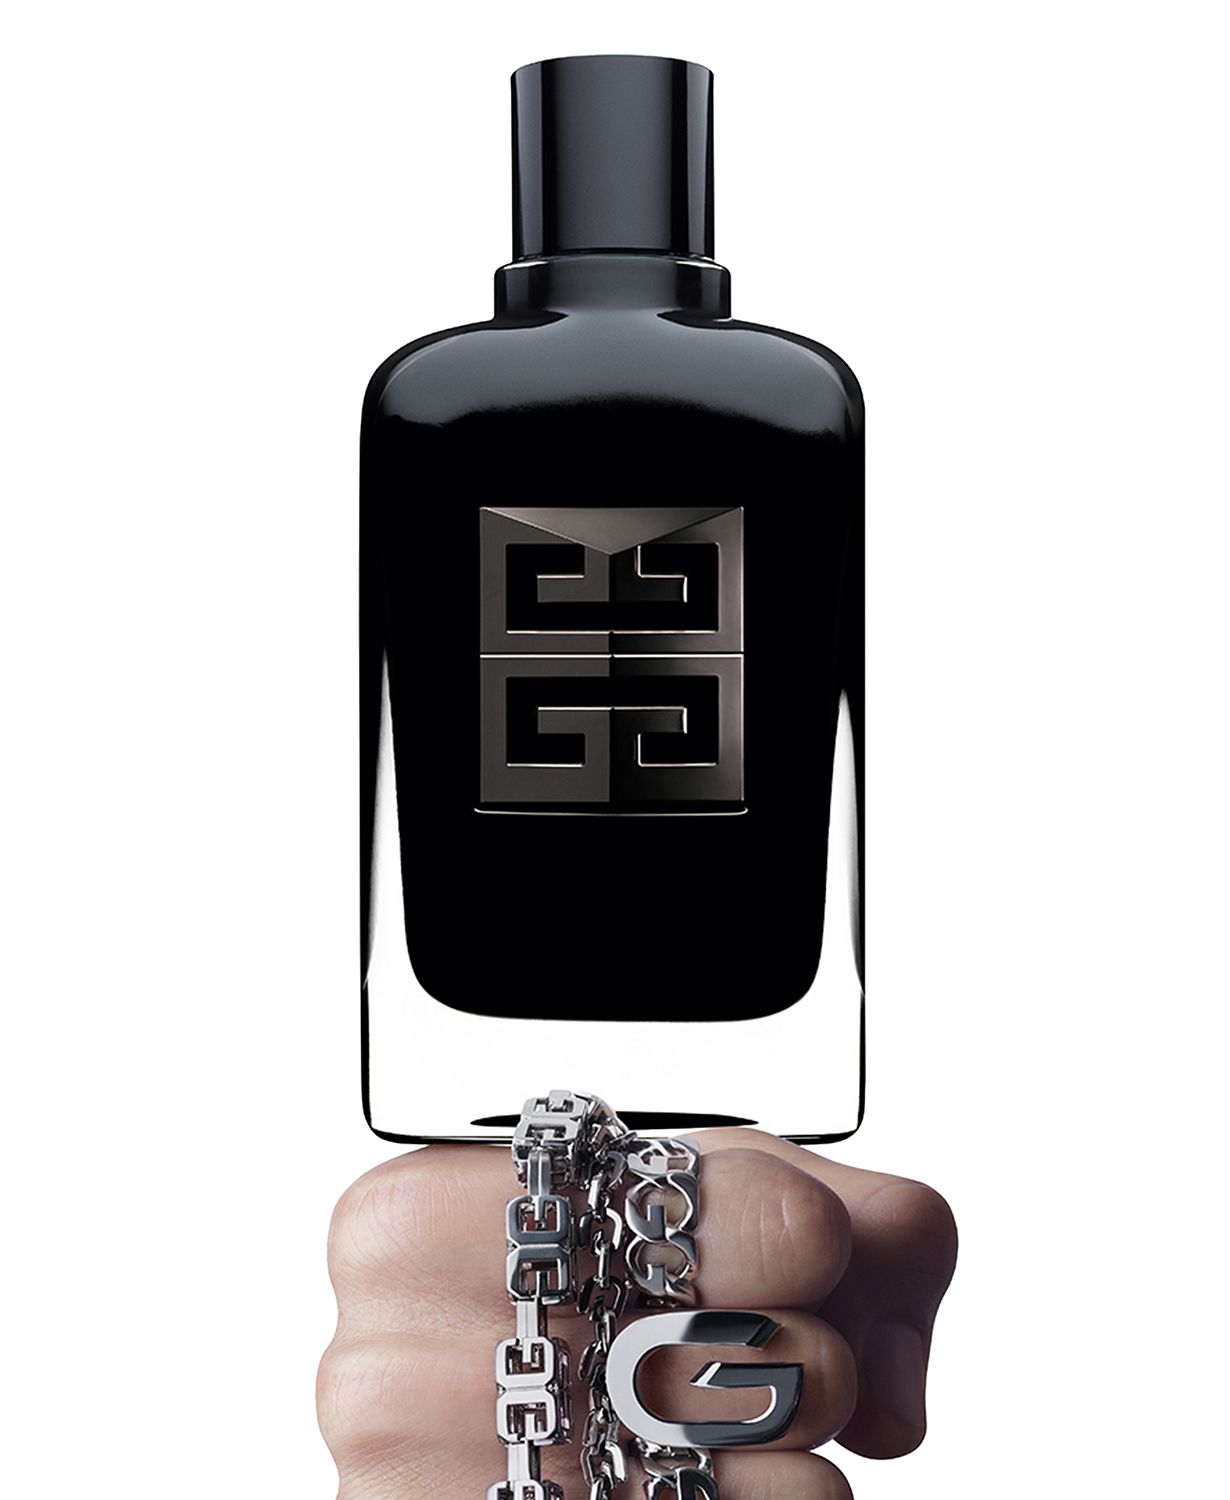 Men's Gentleman Society Eau de Parfum Extrême Spray, 2 oz.